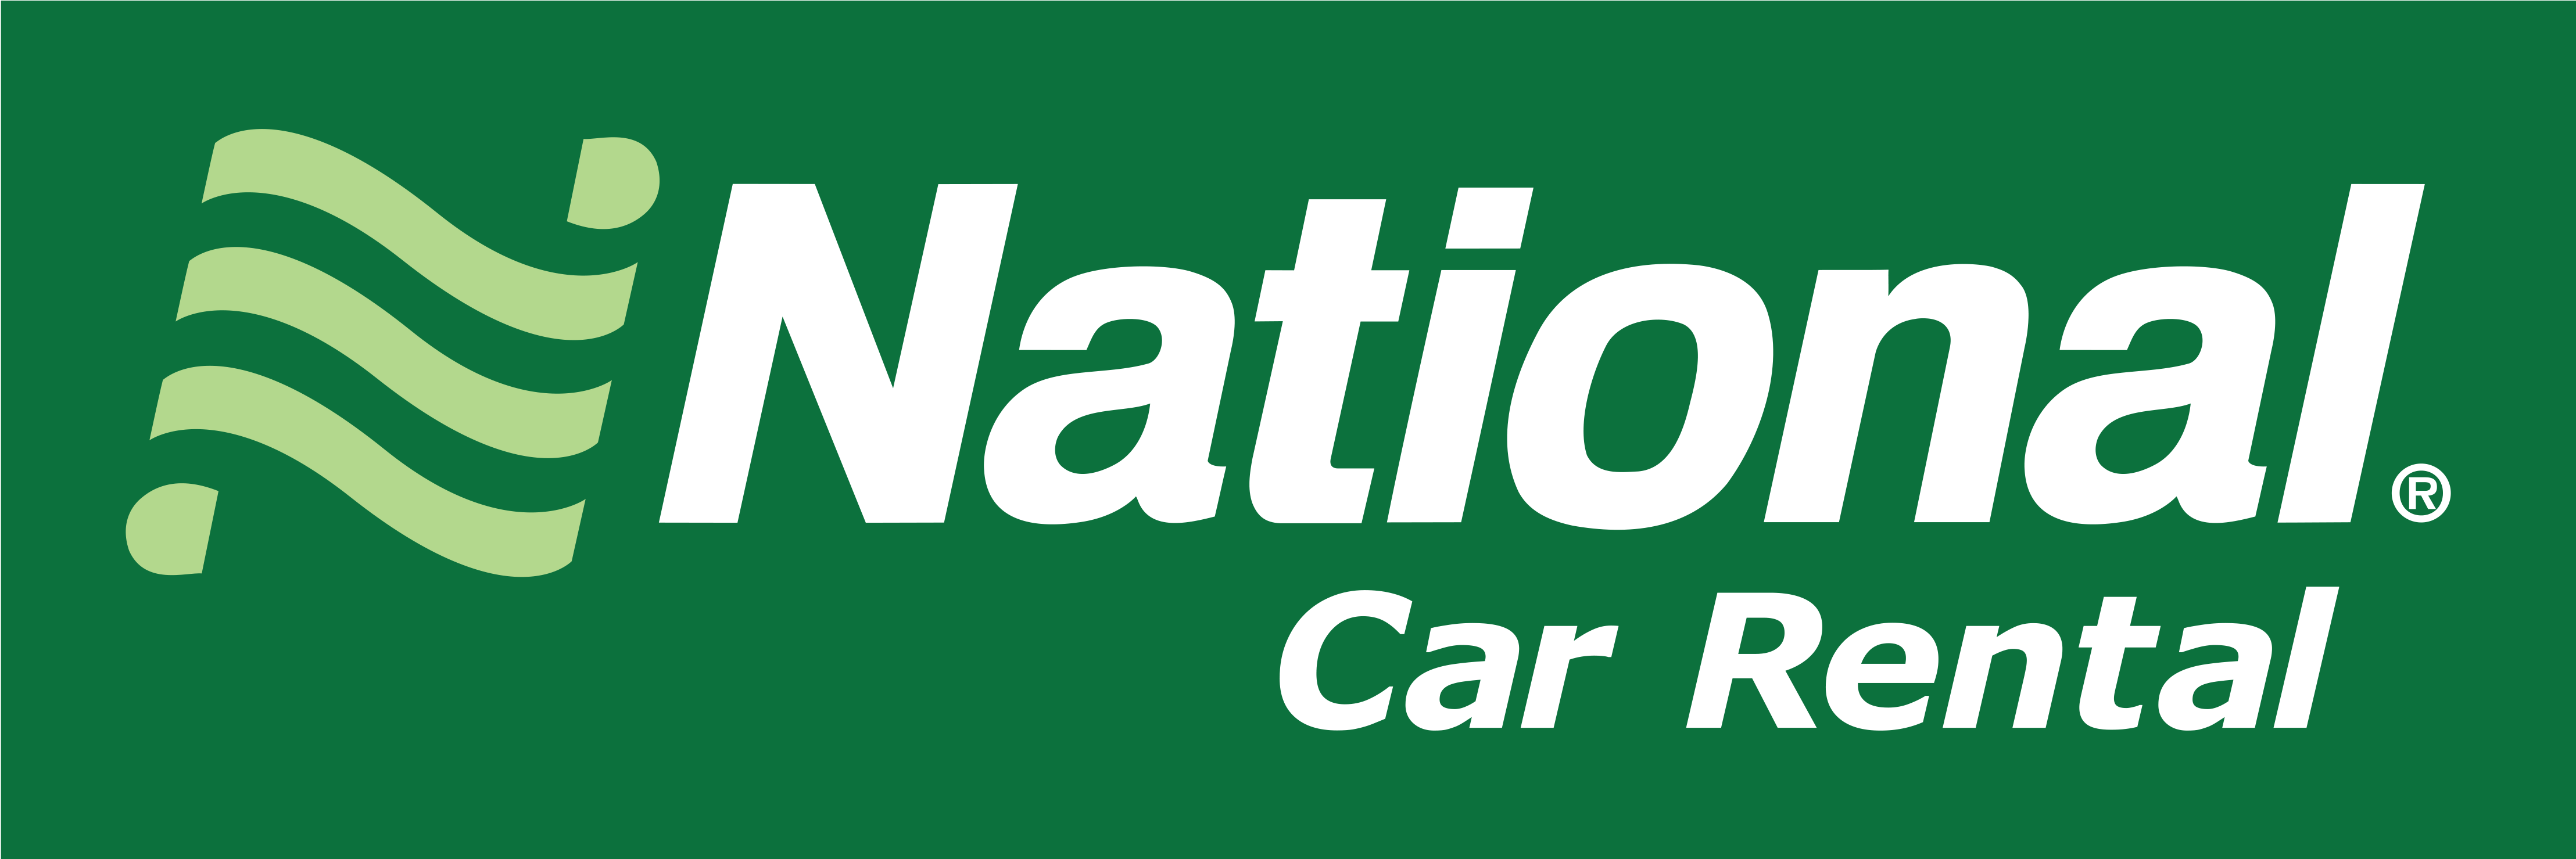 National Car Rental Panama (4500x2700)